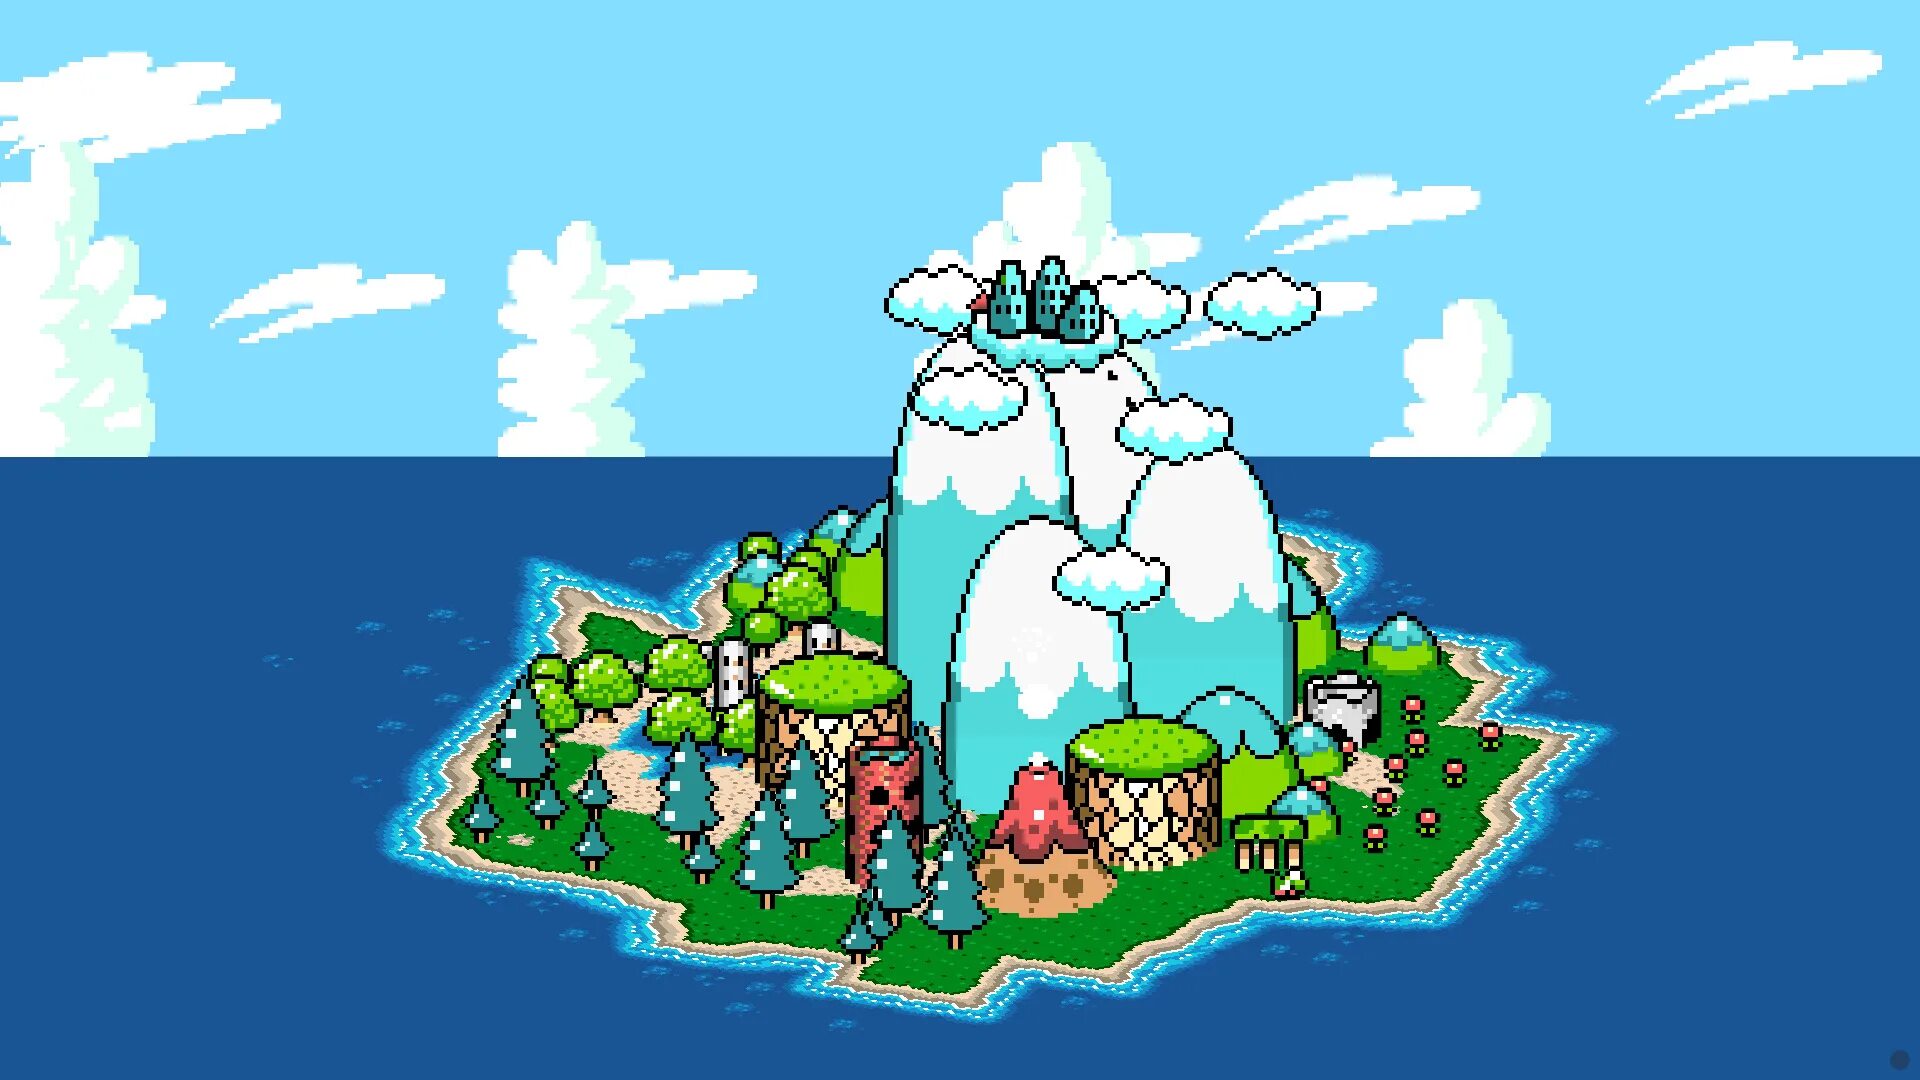 Hero's island